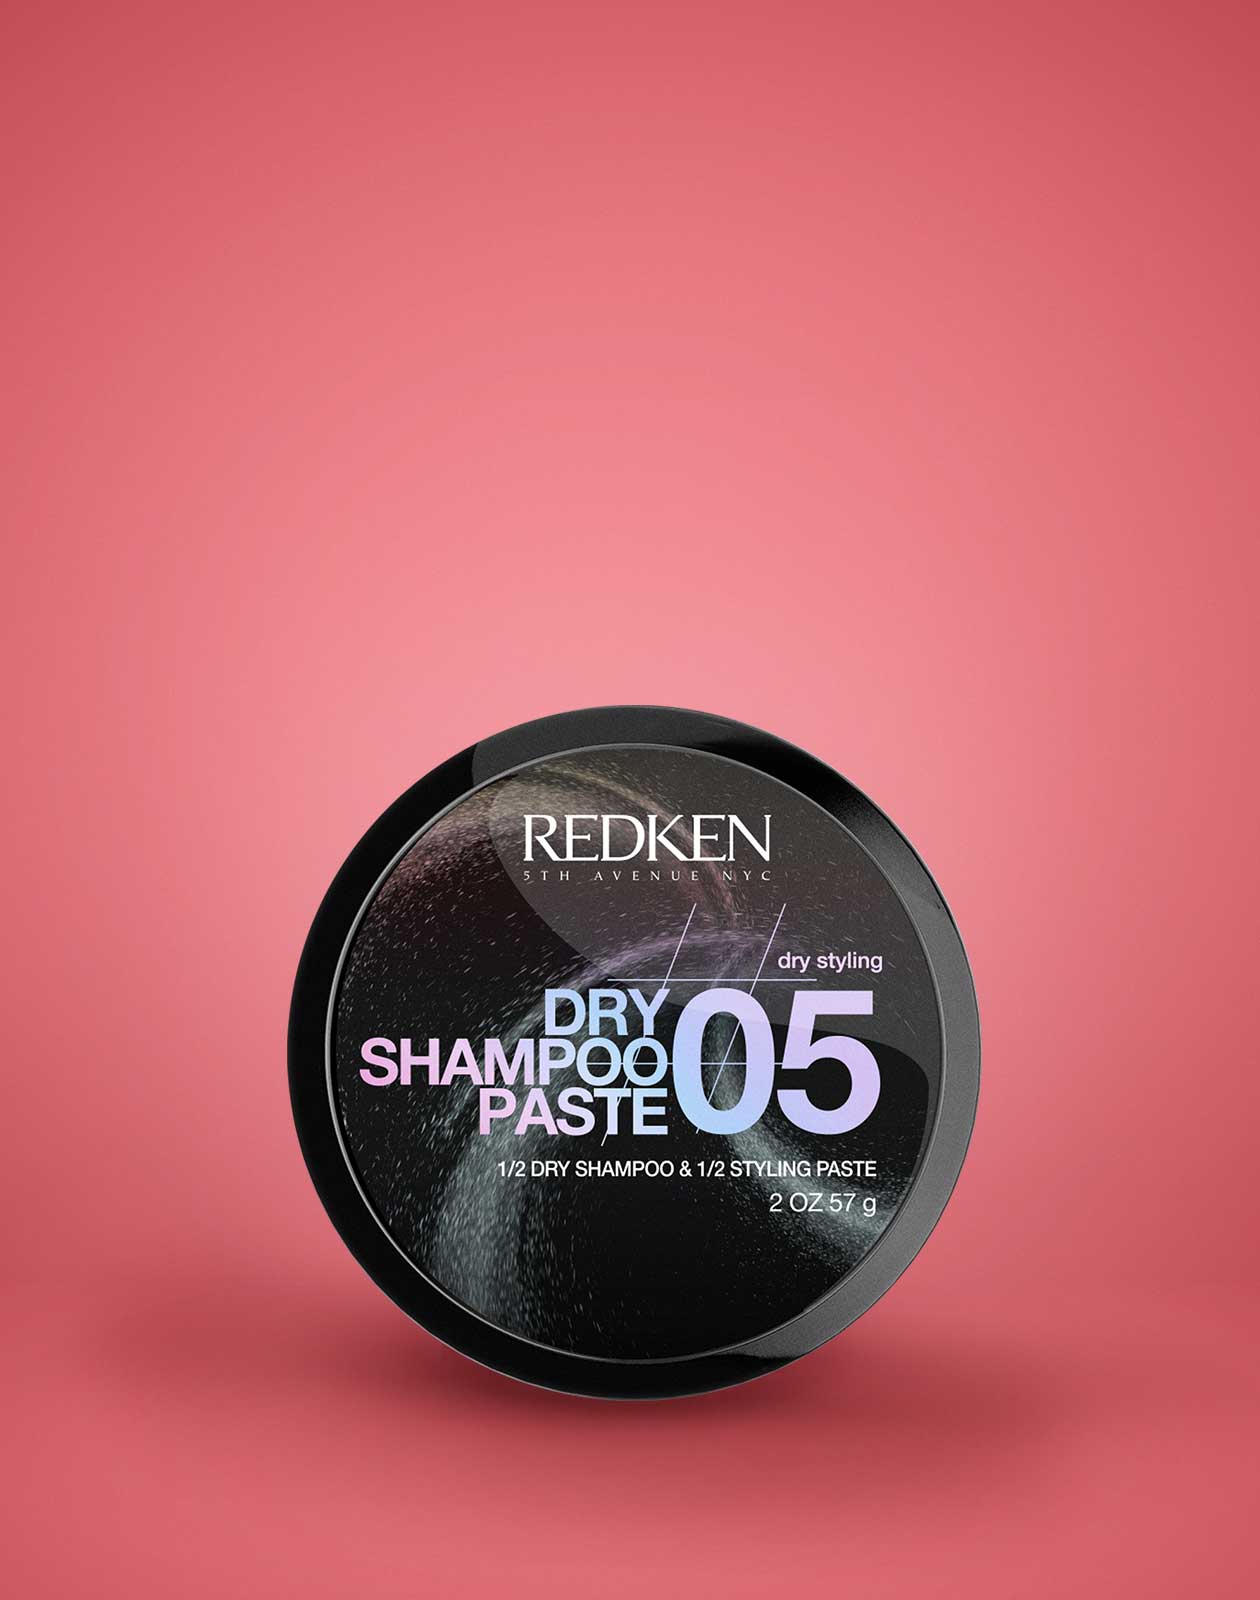 Redken Dry Shampoo Paste 05 | Day